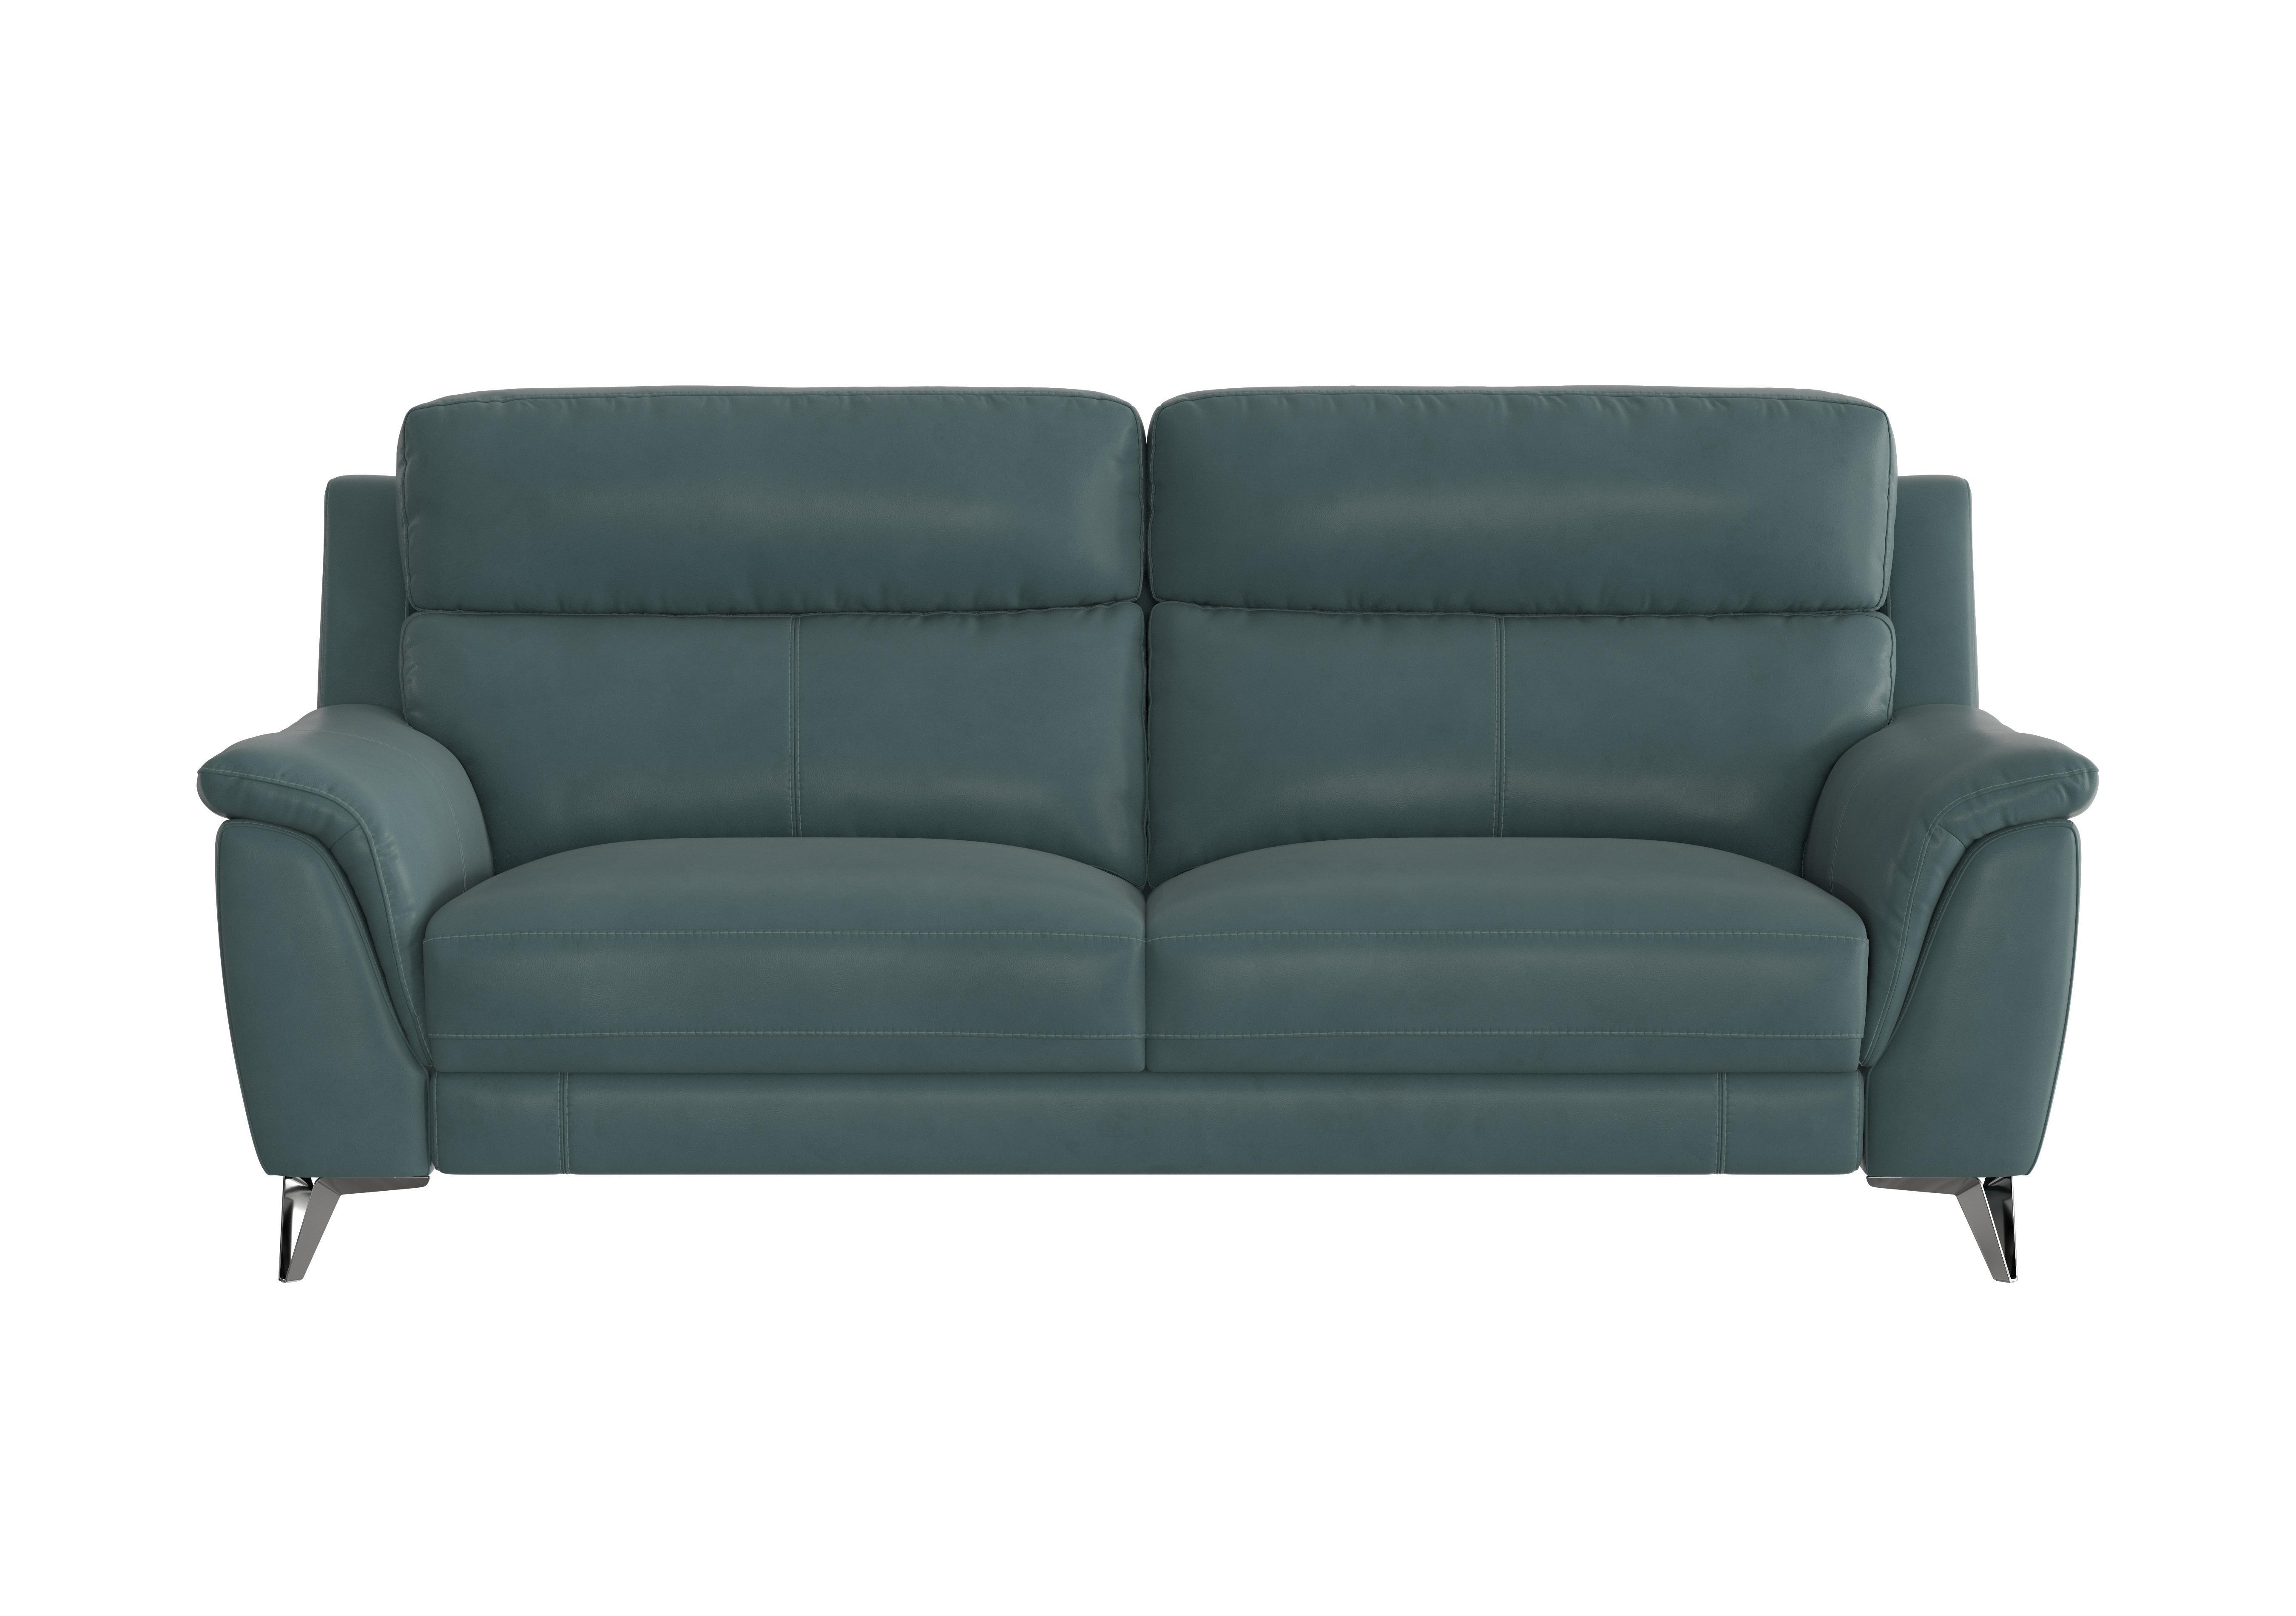 Contempo 3 Seater Leather Sofa in Bv-301e Lake Green on Furniture Village